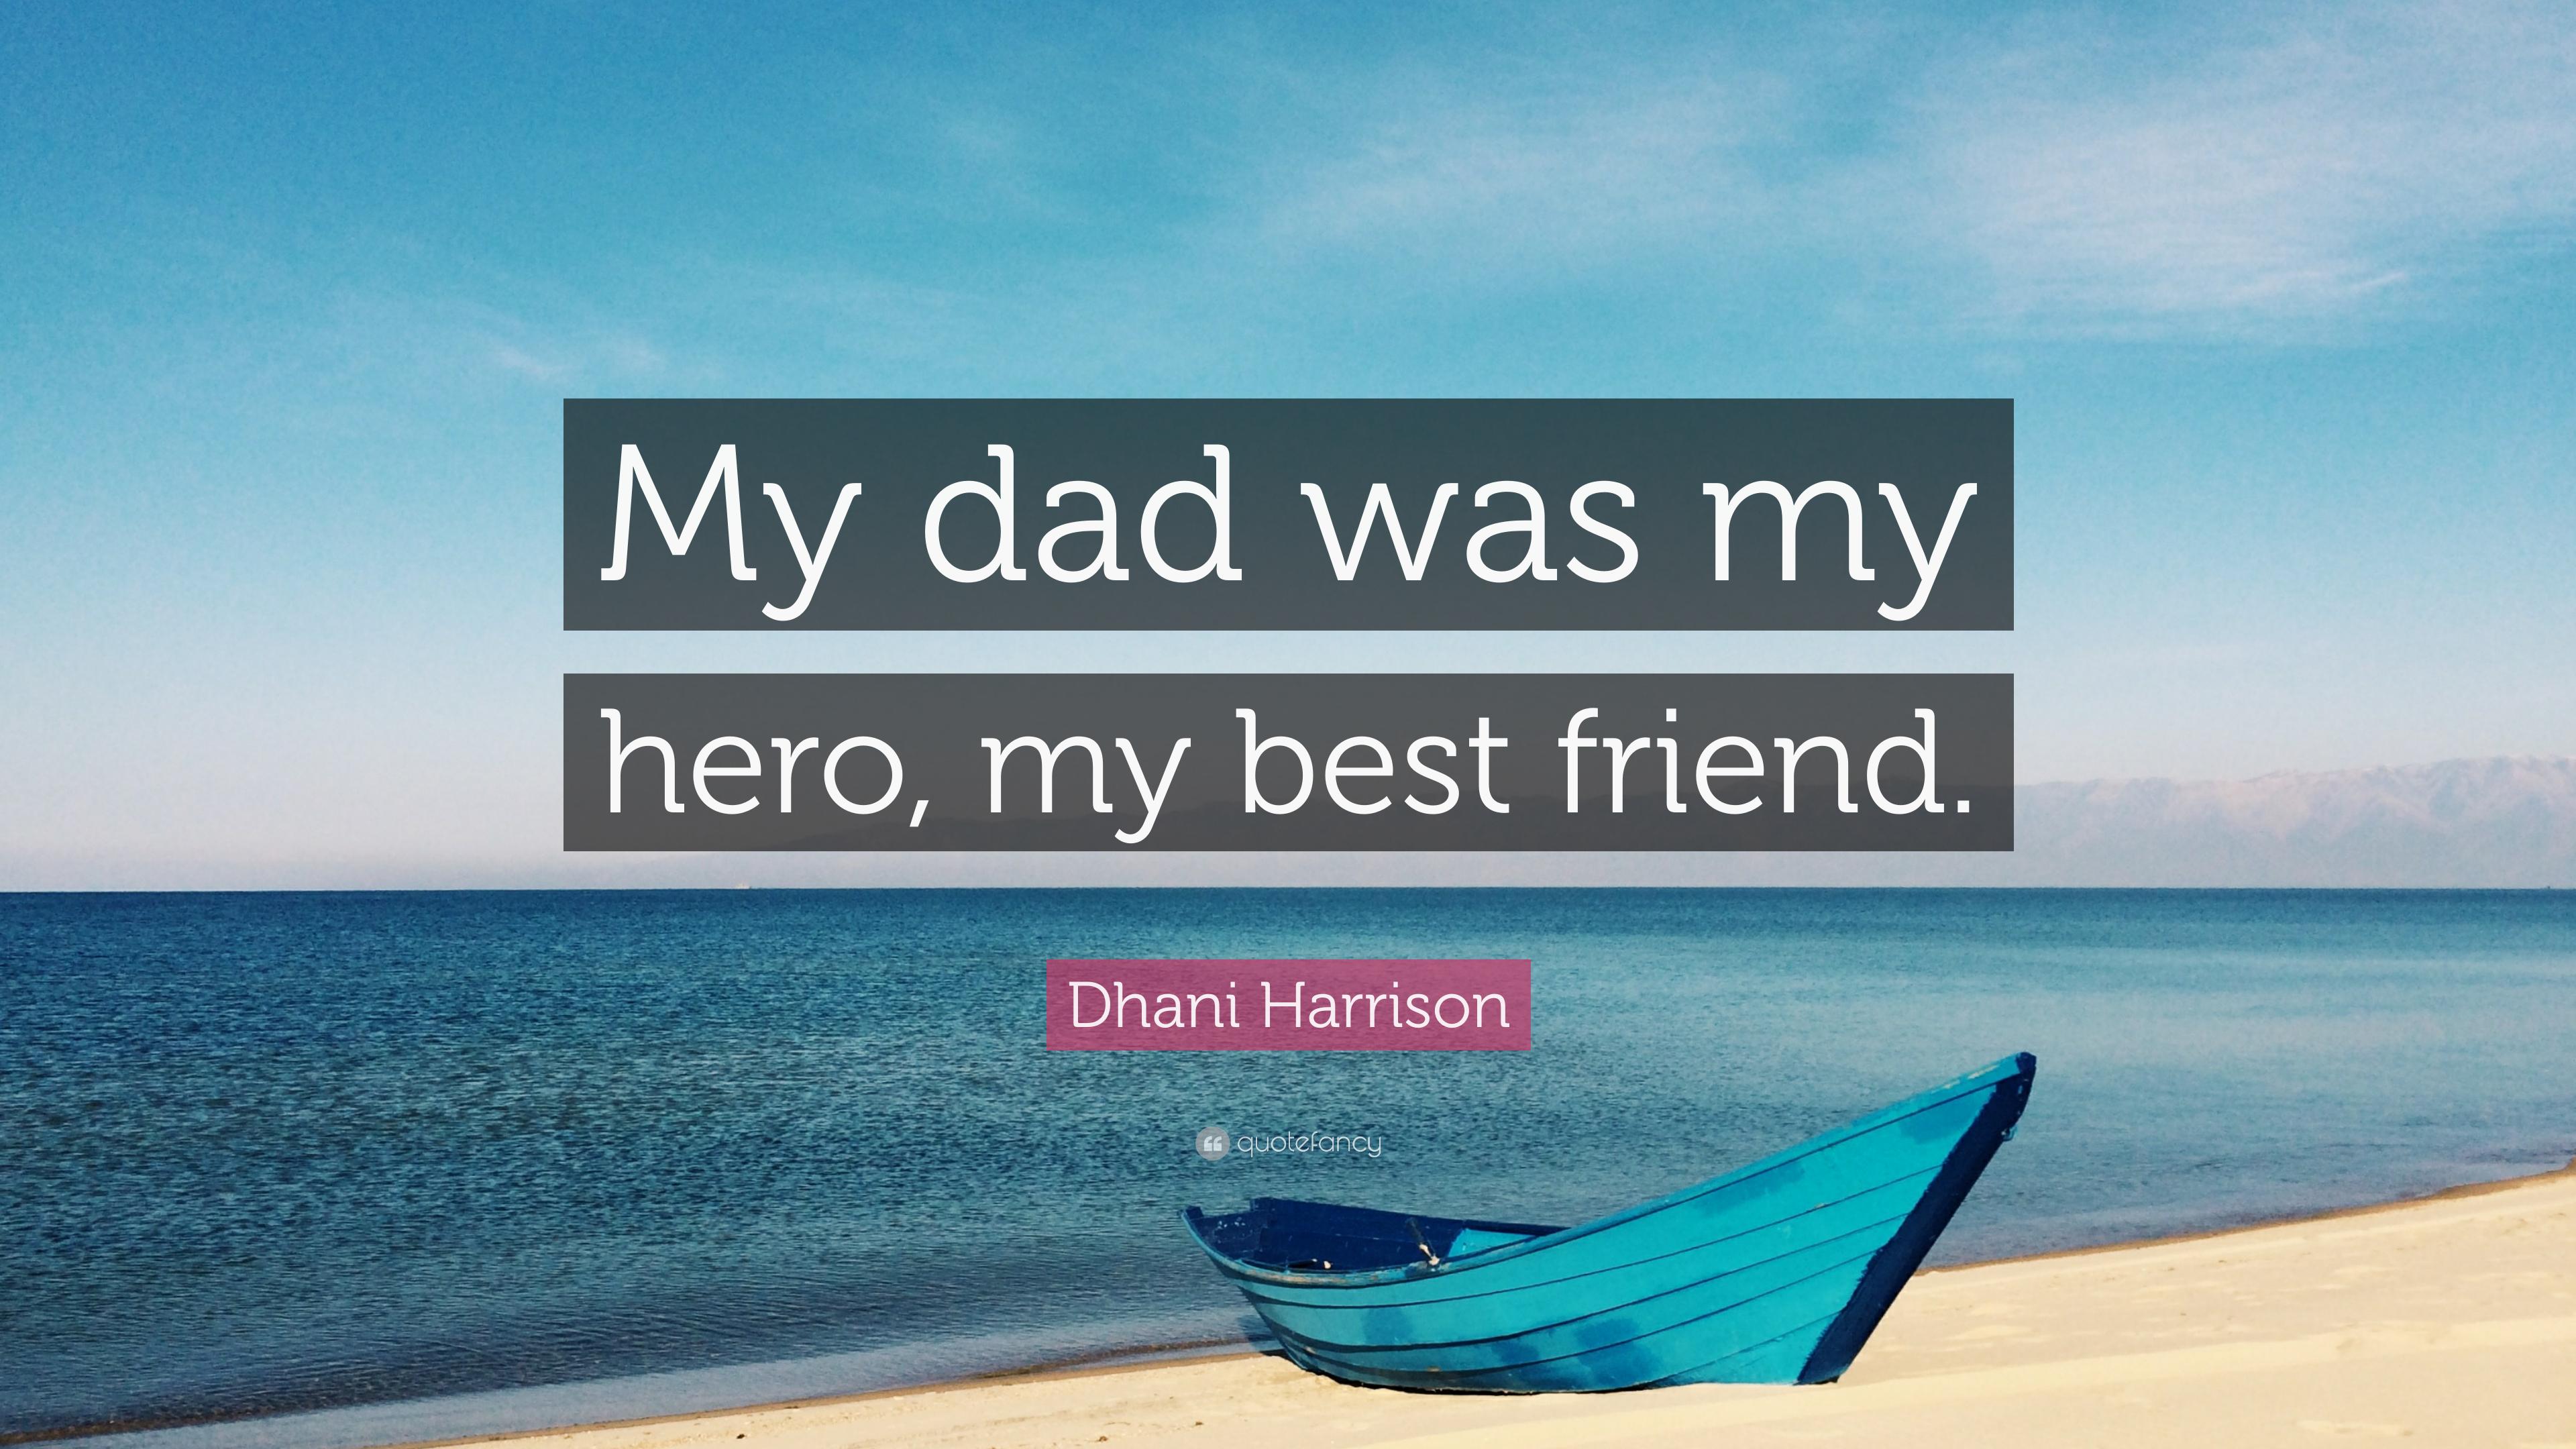 Dhani Harrison Quote: “My dad was my hero, my best friend